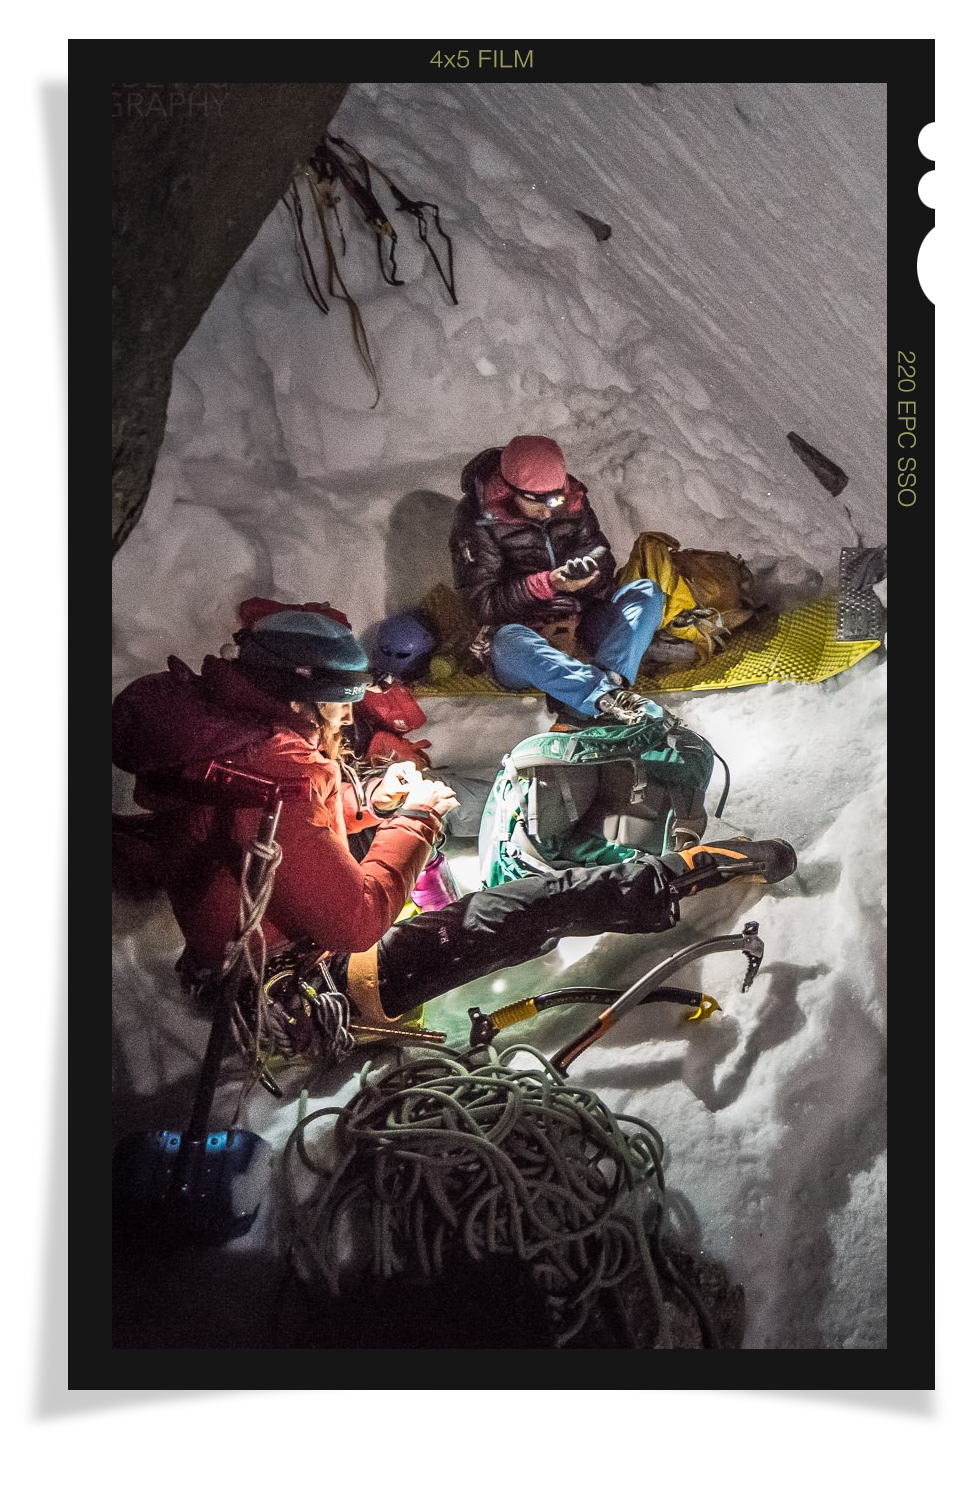 Gordon at camp during Everest climb.